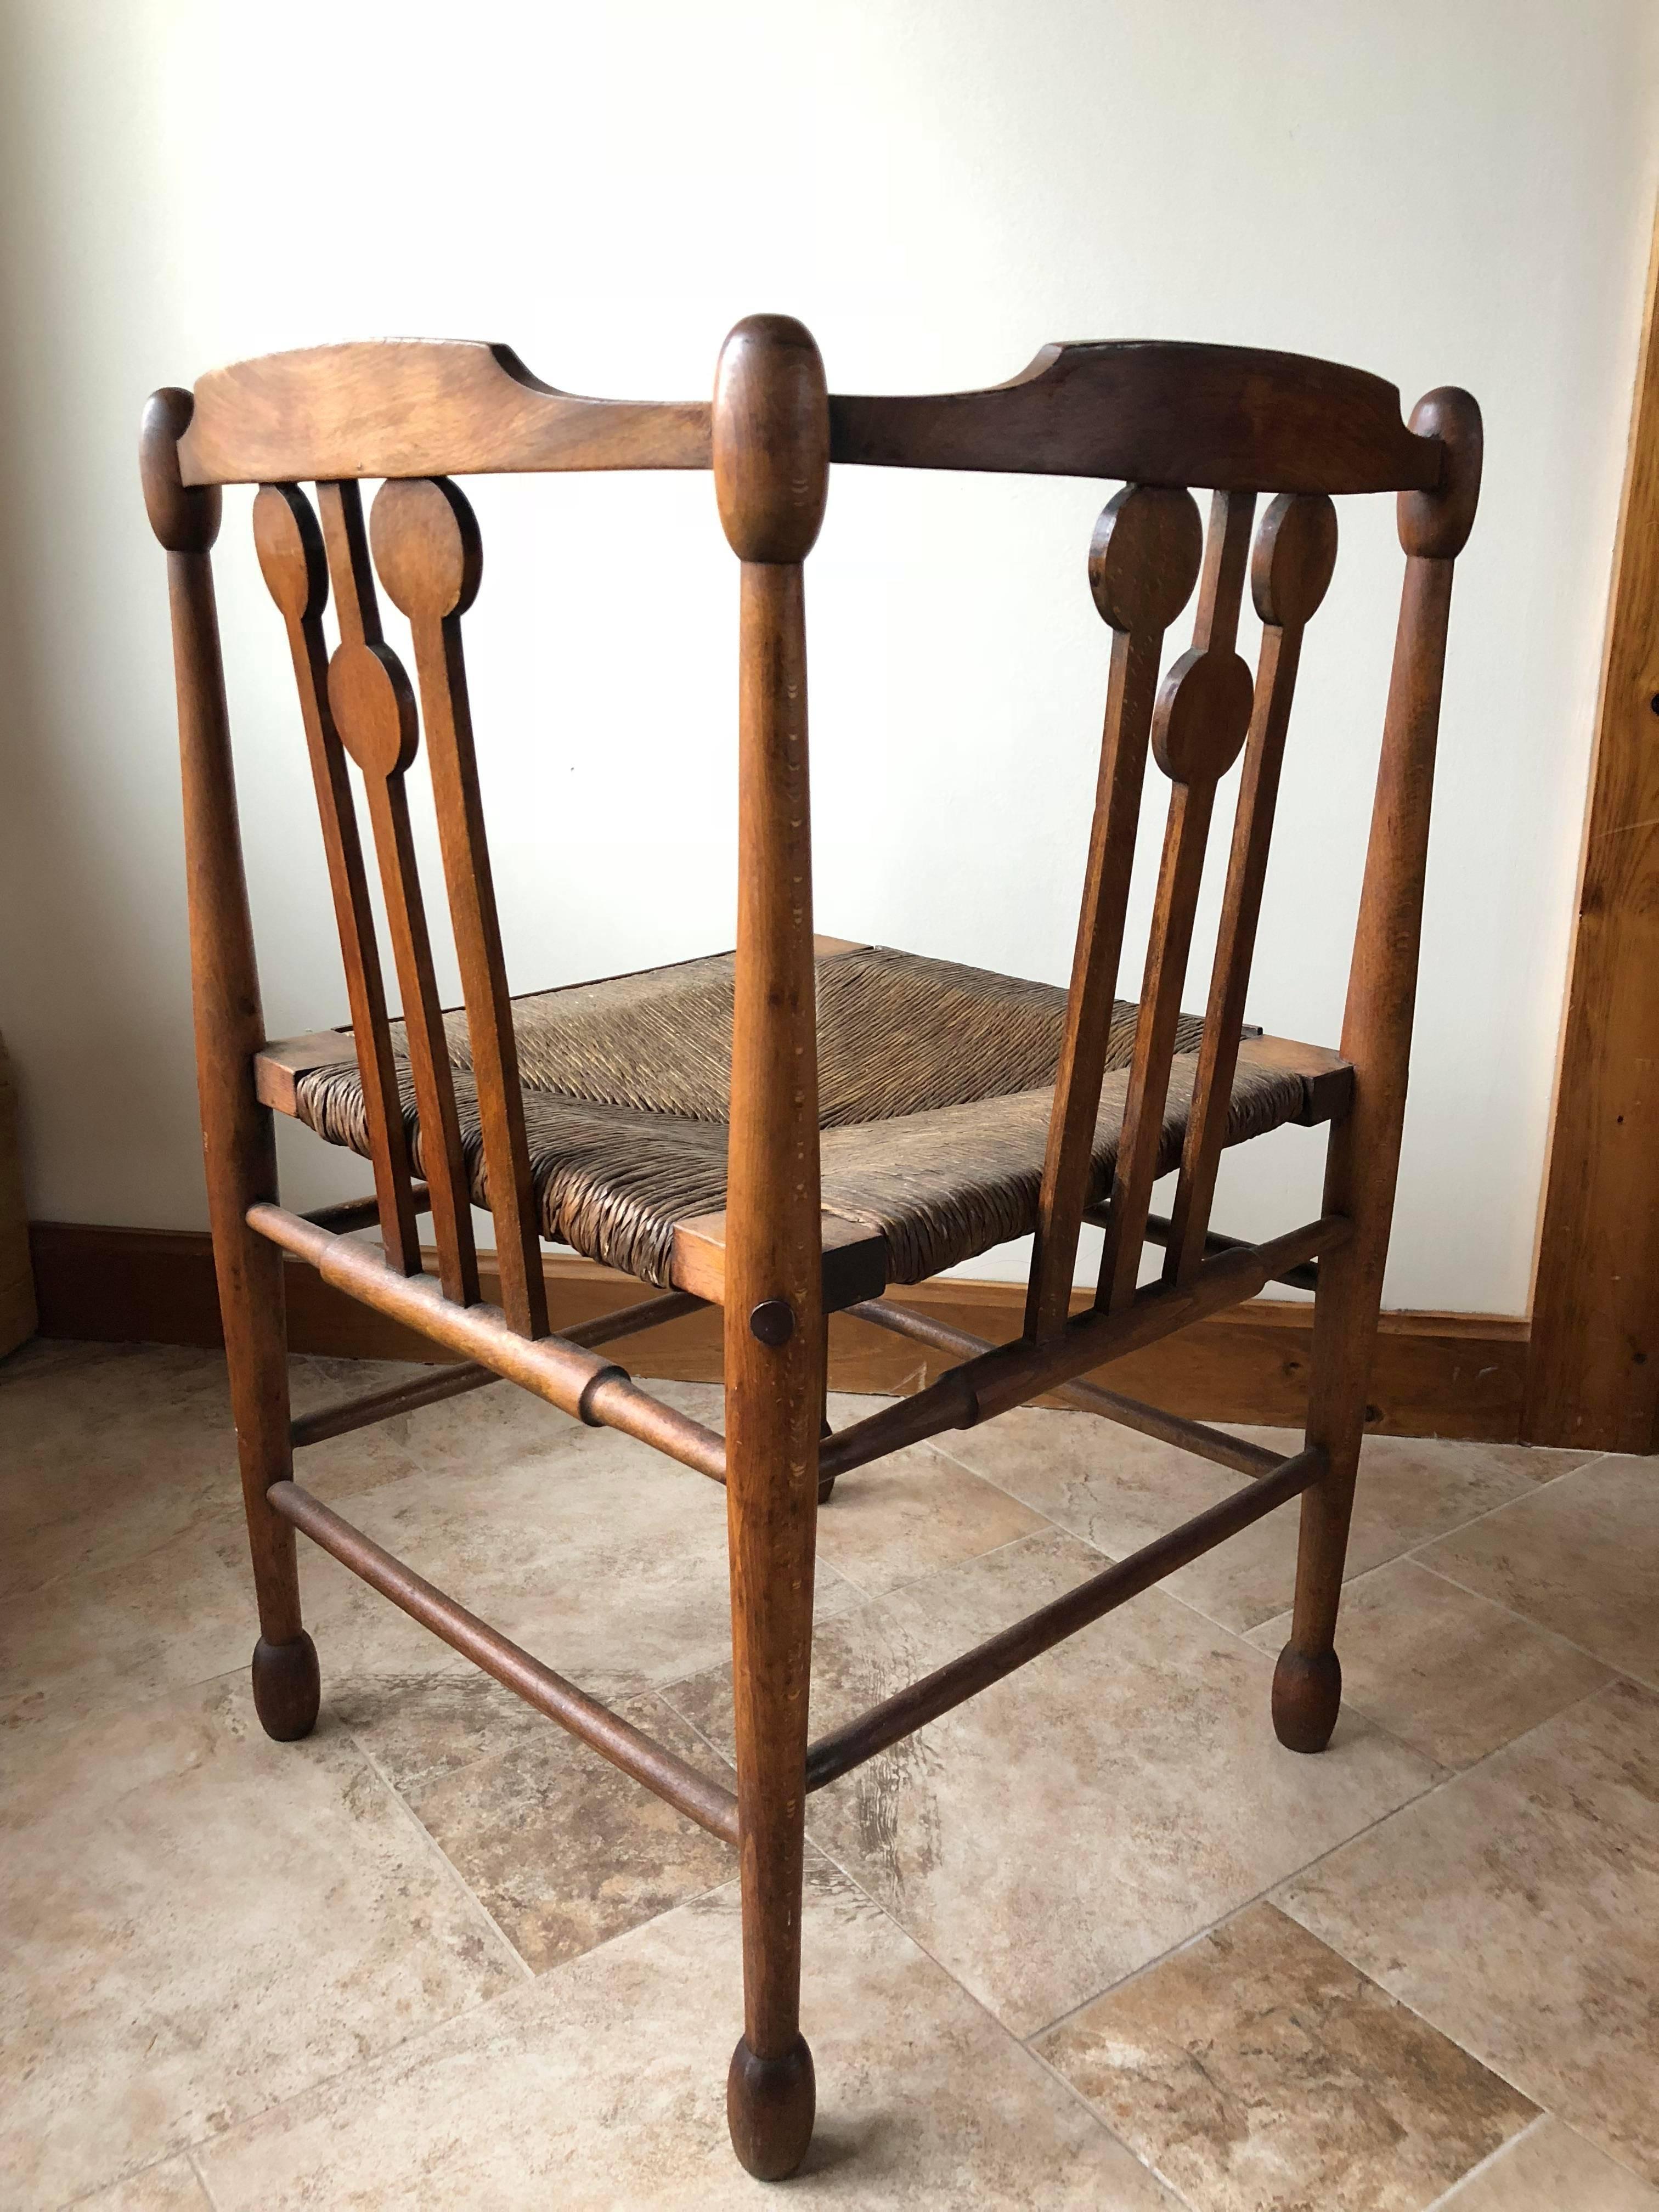 English Arts & Crafts Period Corner Chair 1